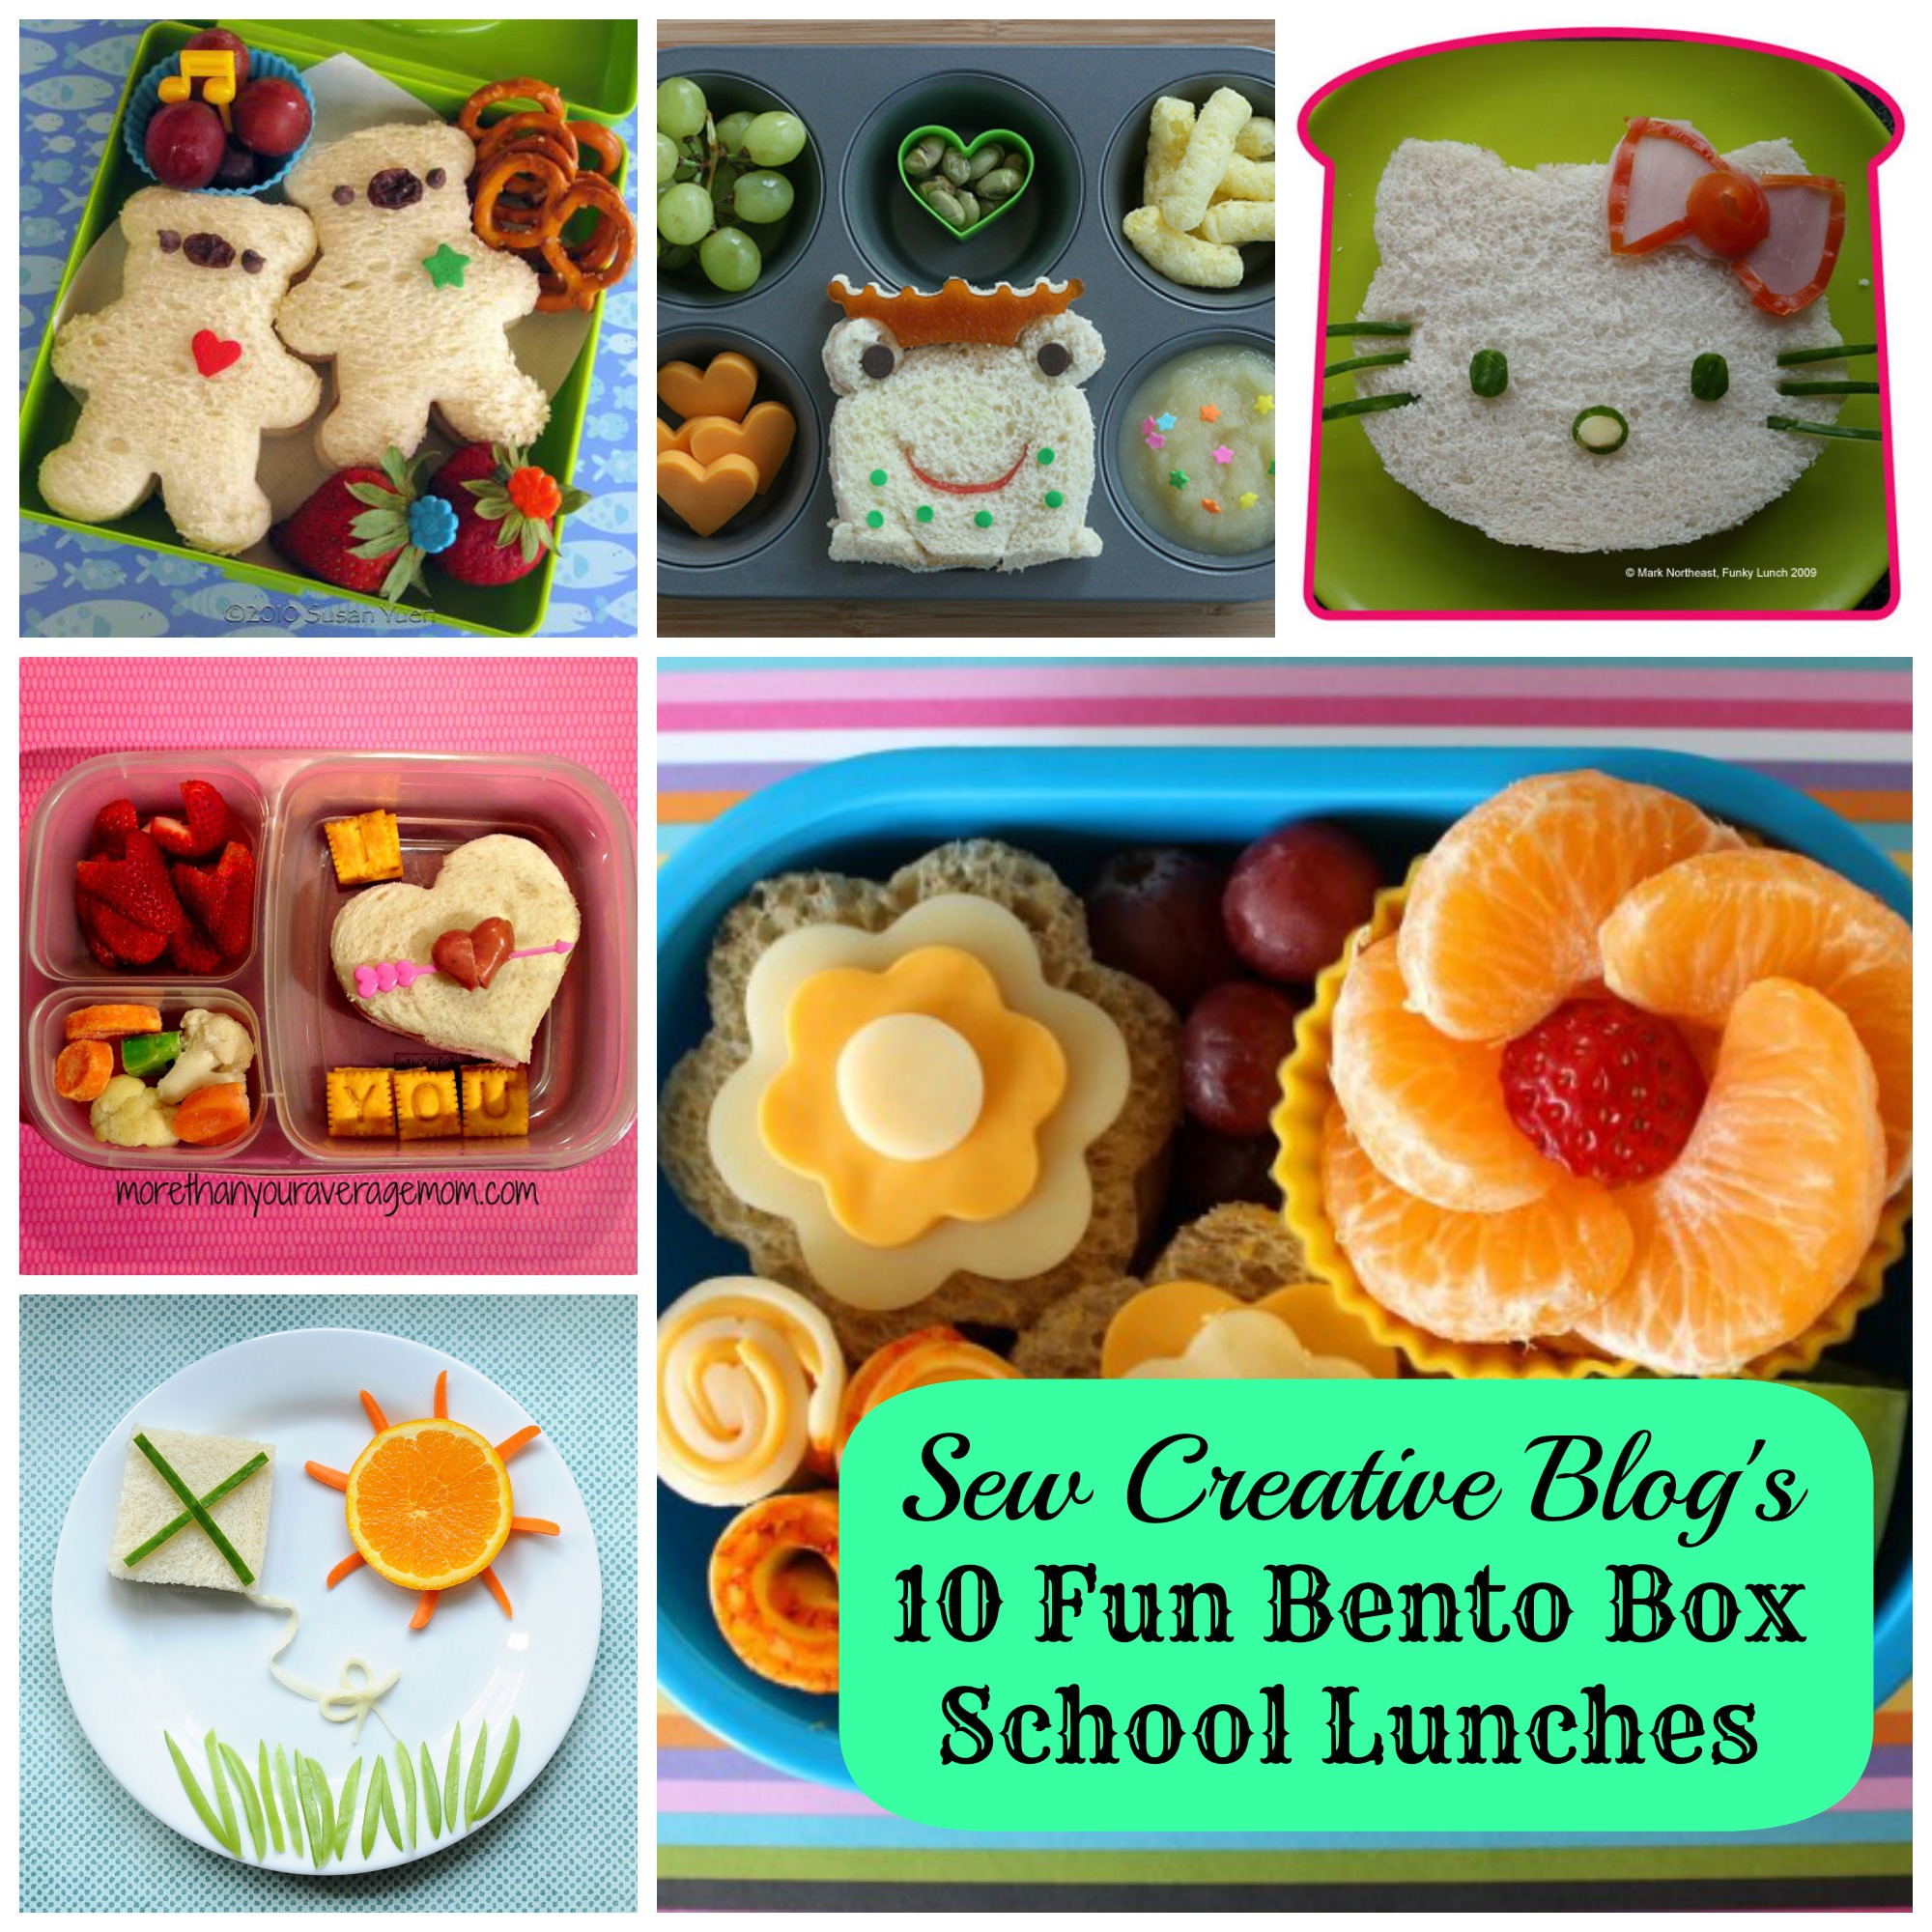 weekly inspiration: 10 fun bento box school lunches - hello creative